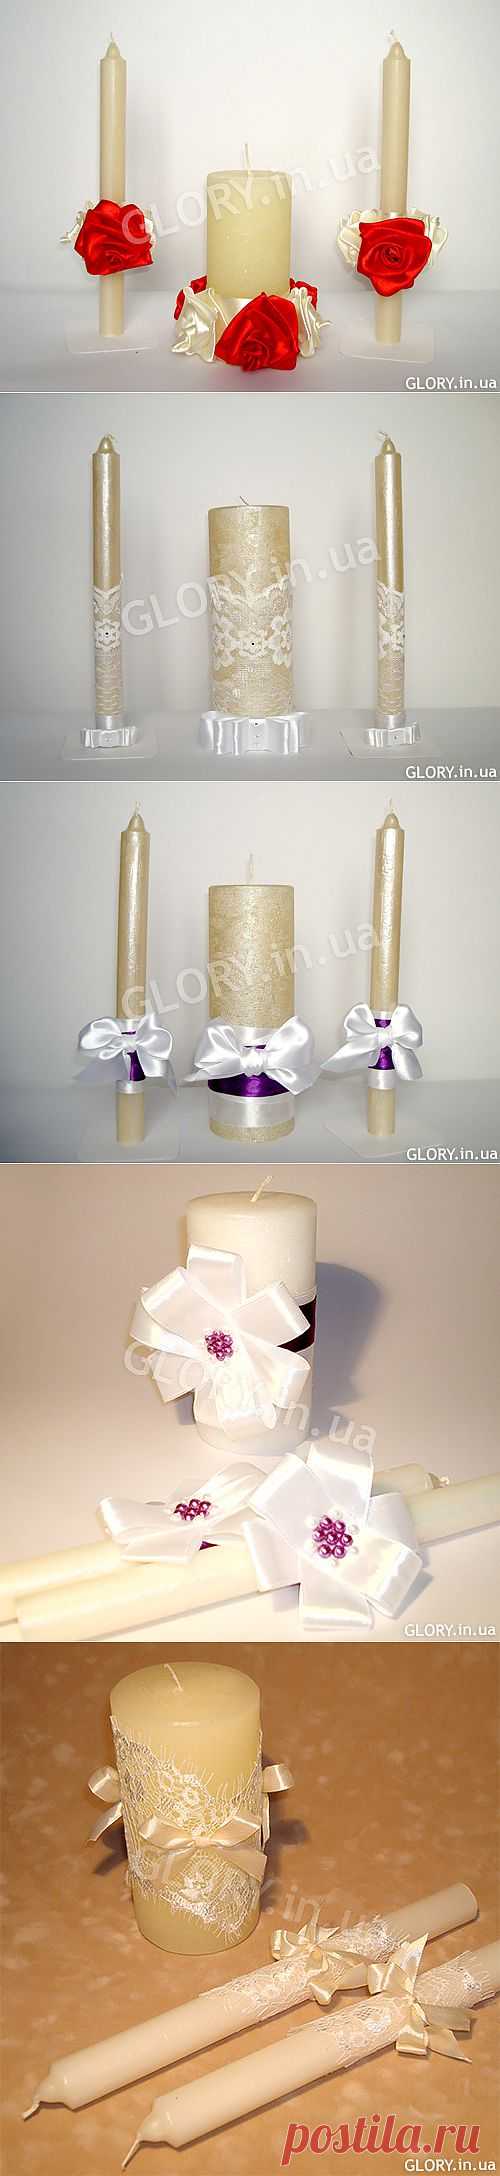 Свадебные свечи для ритуала. Декоративные свечи. | GLORY.in.ua